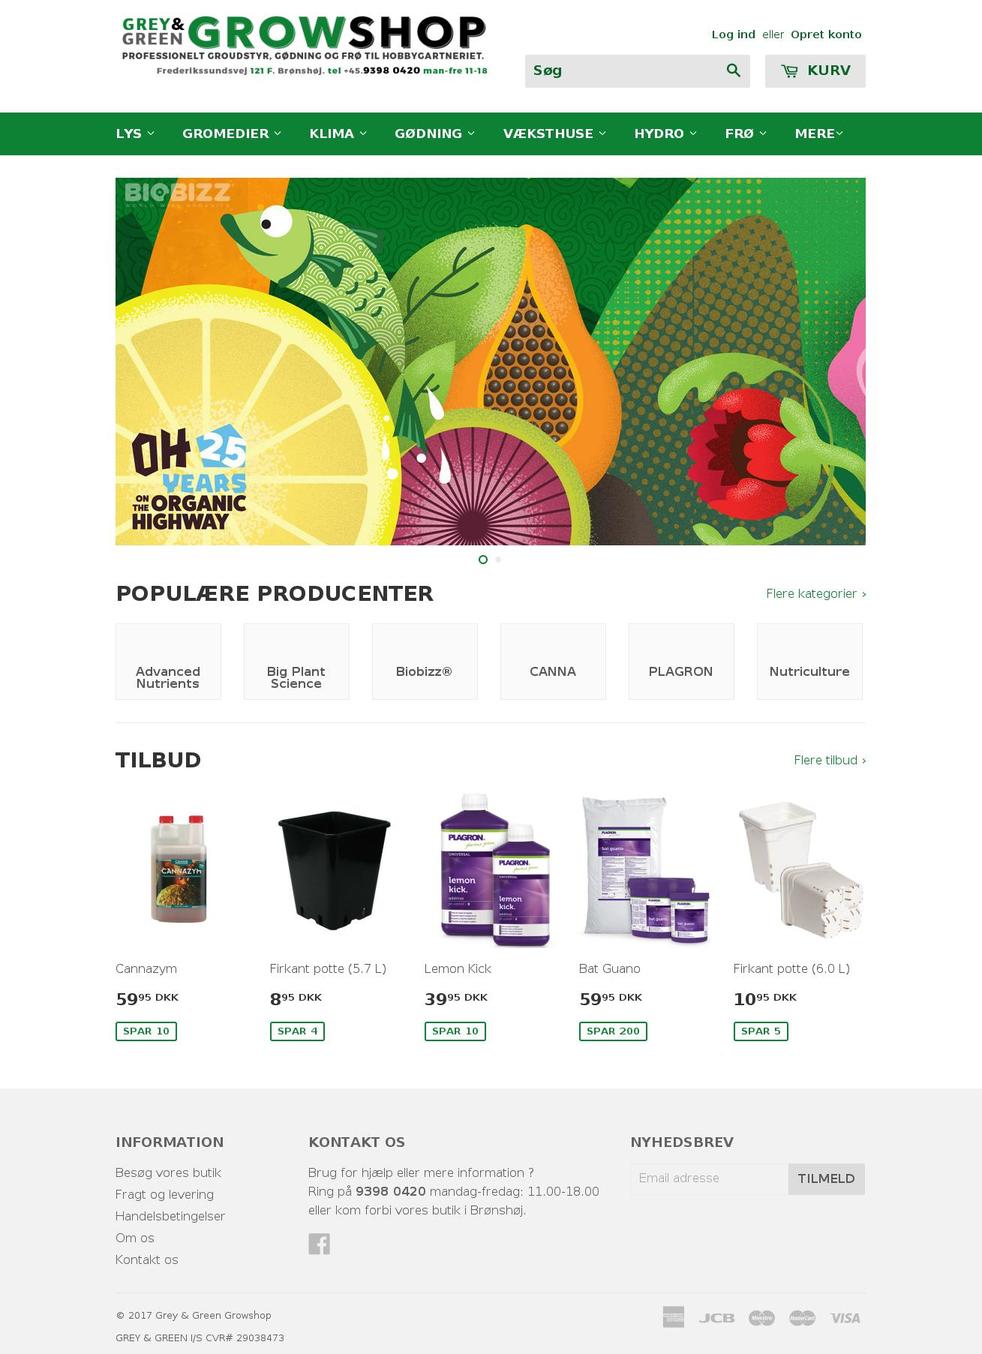 growshop.dk shopify website screenshot